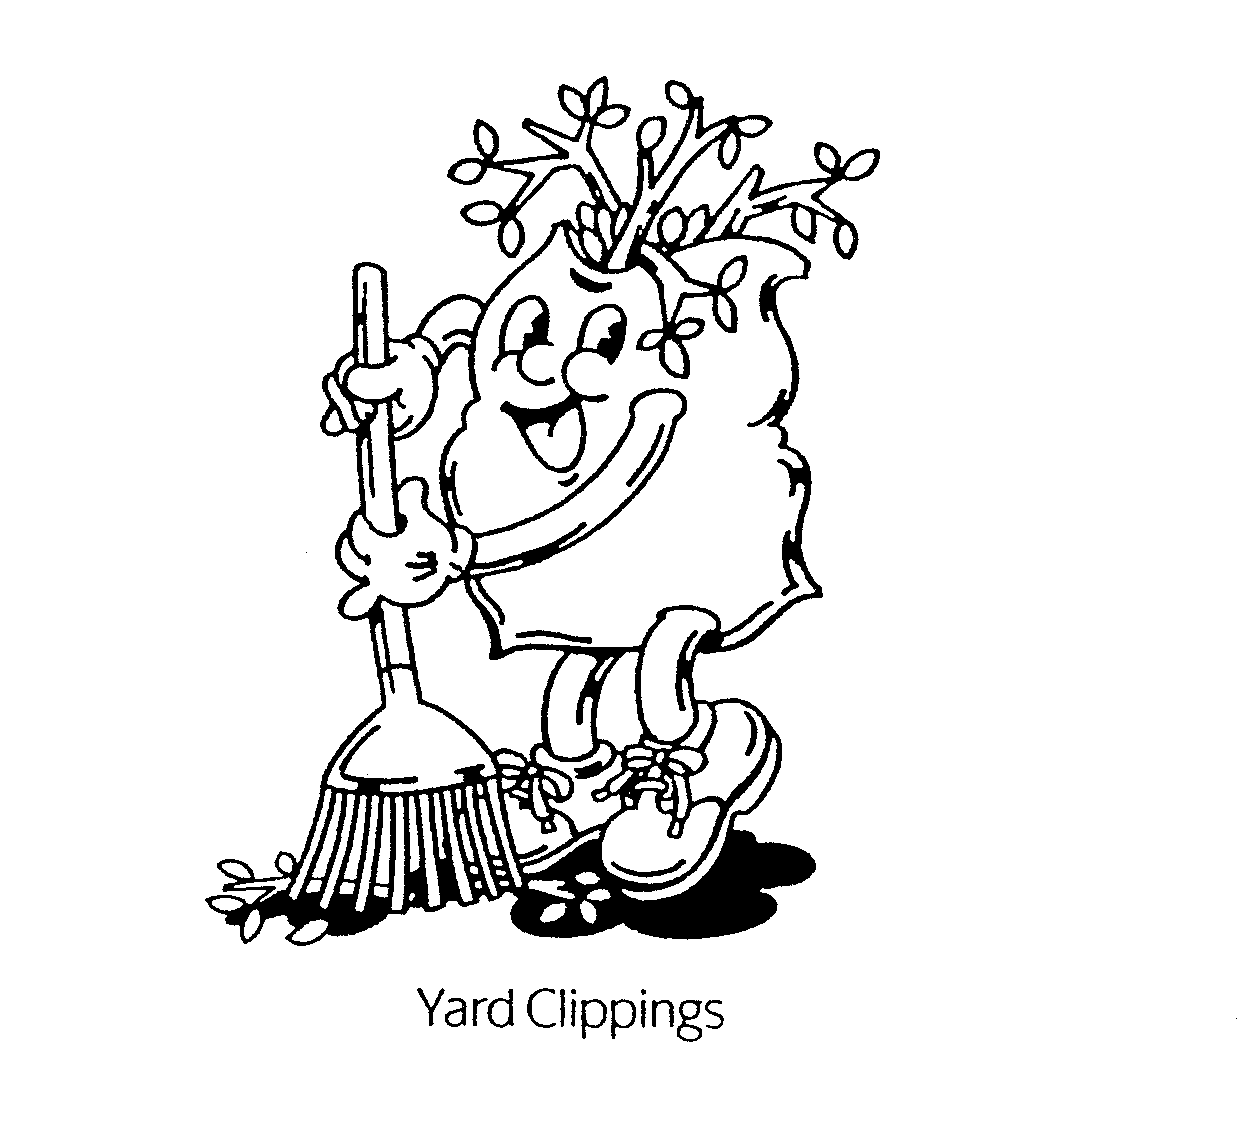  YARD CLIPPINGS